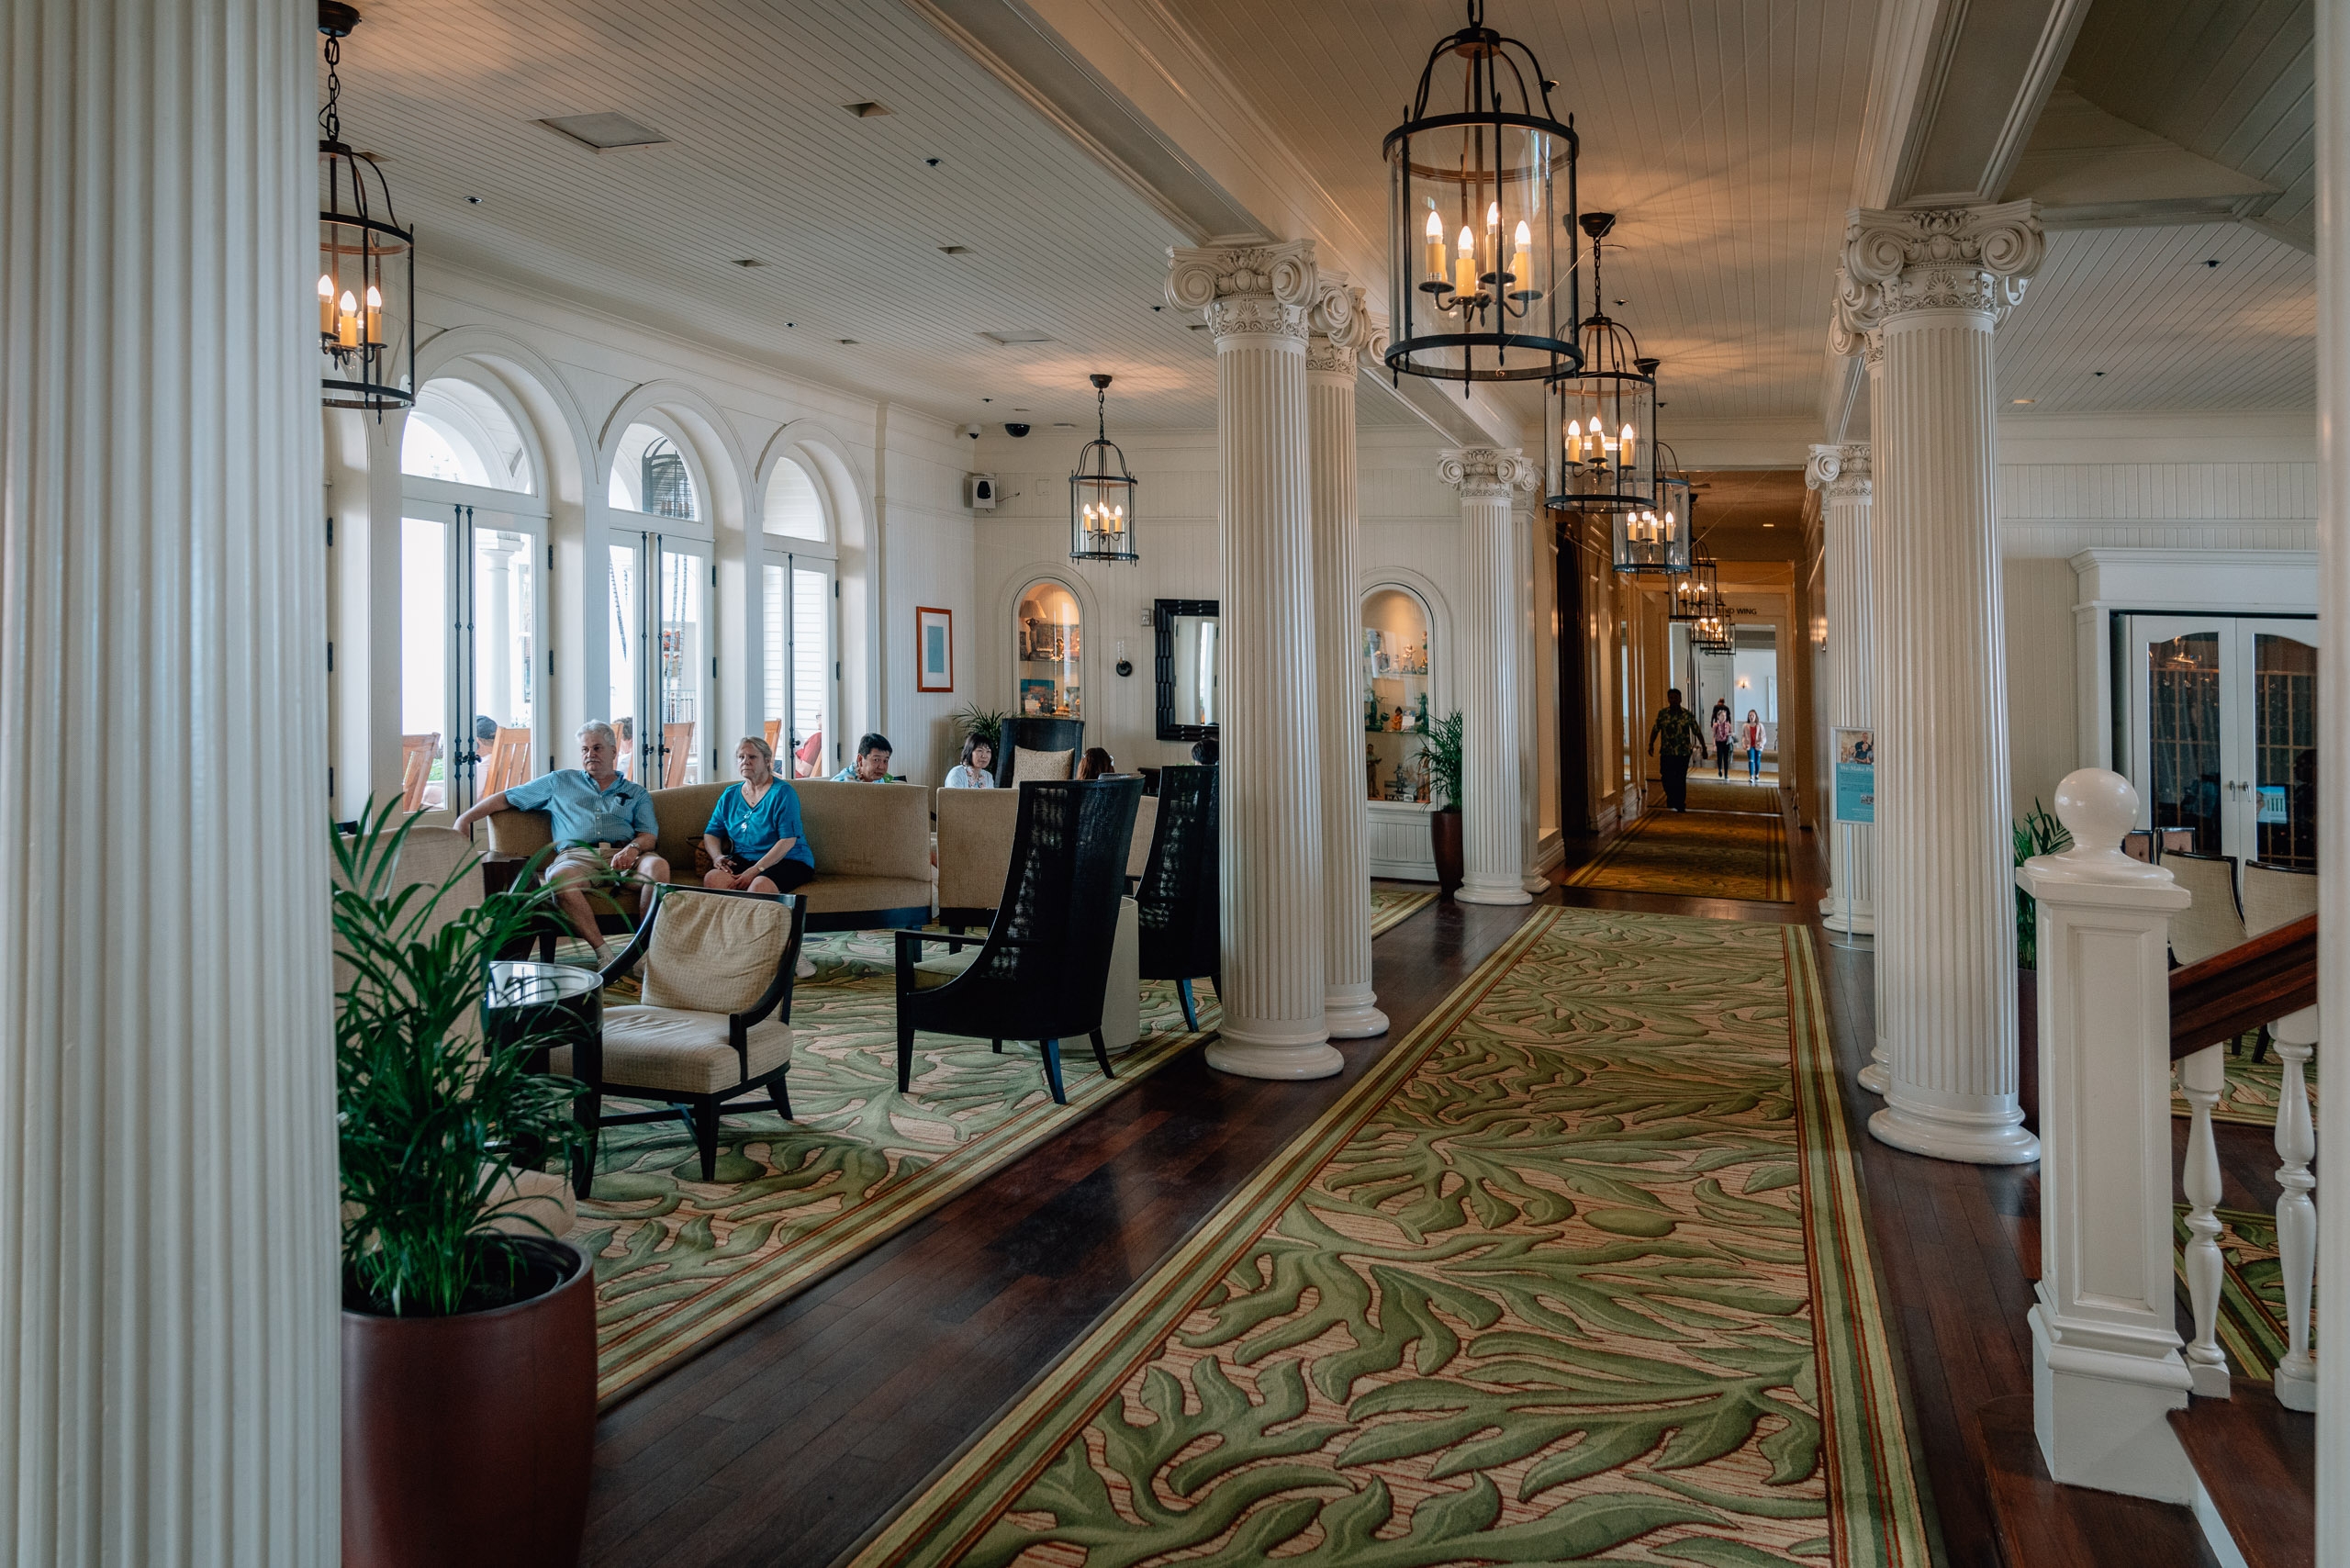 The Lobby of the Moana Surfrider Hotel Part II